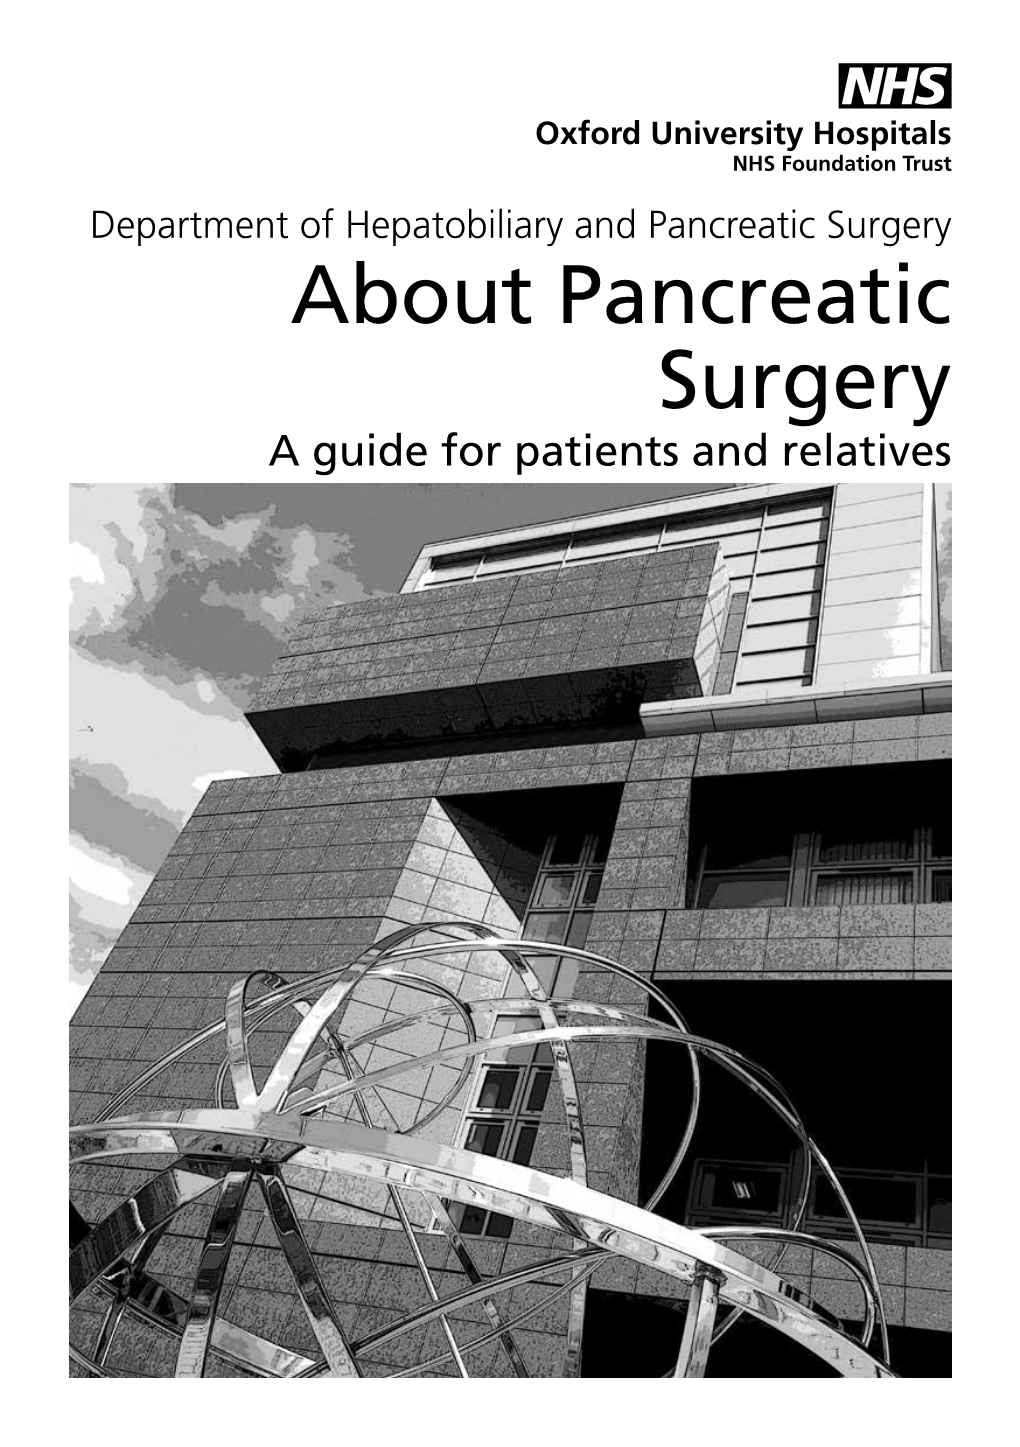 About Pancreatic Surgery